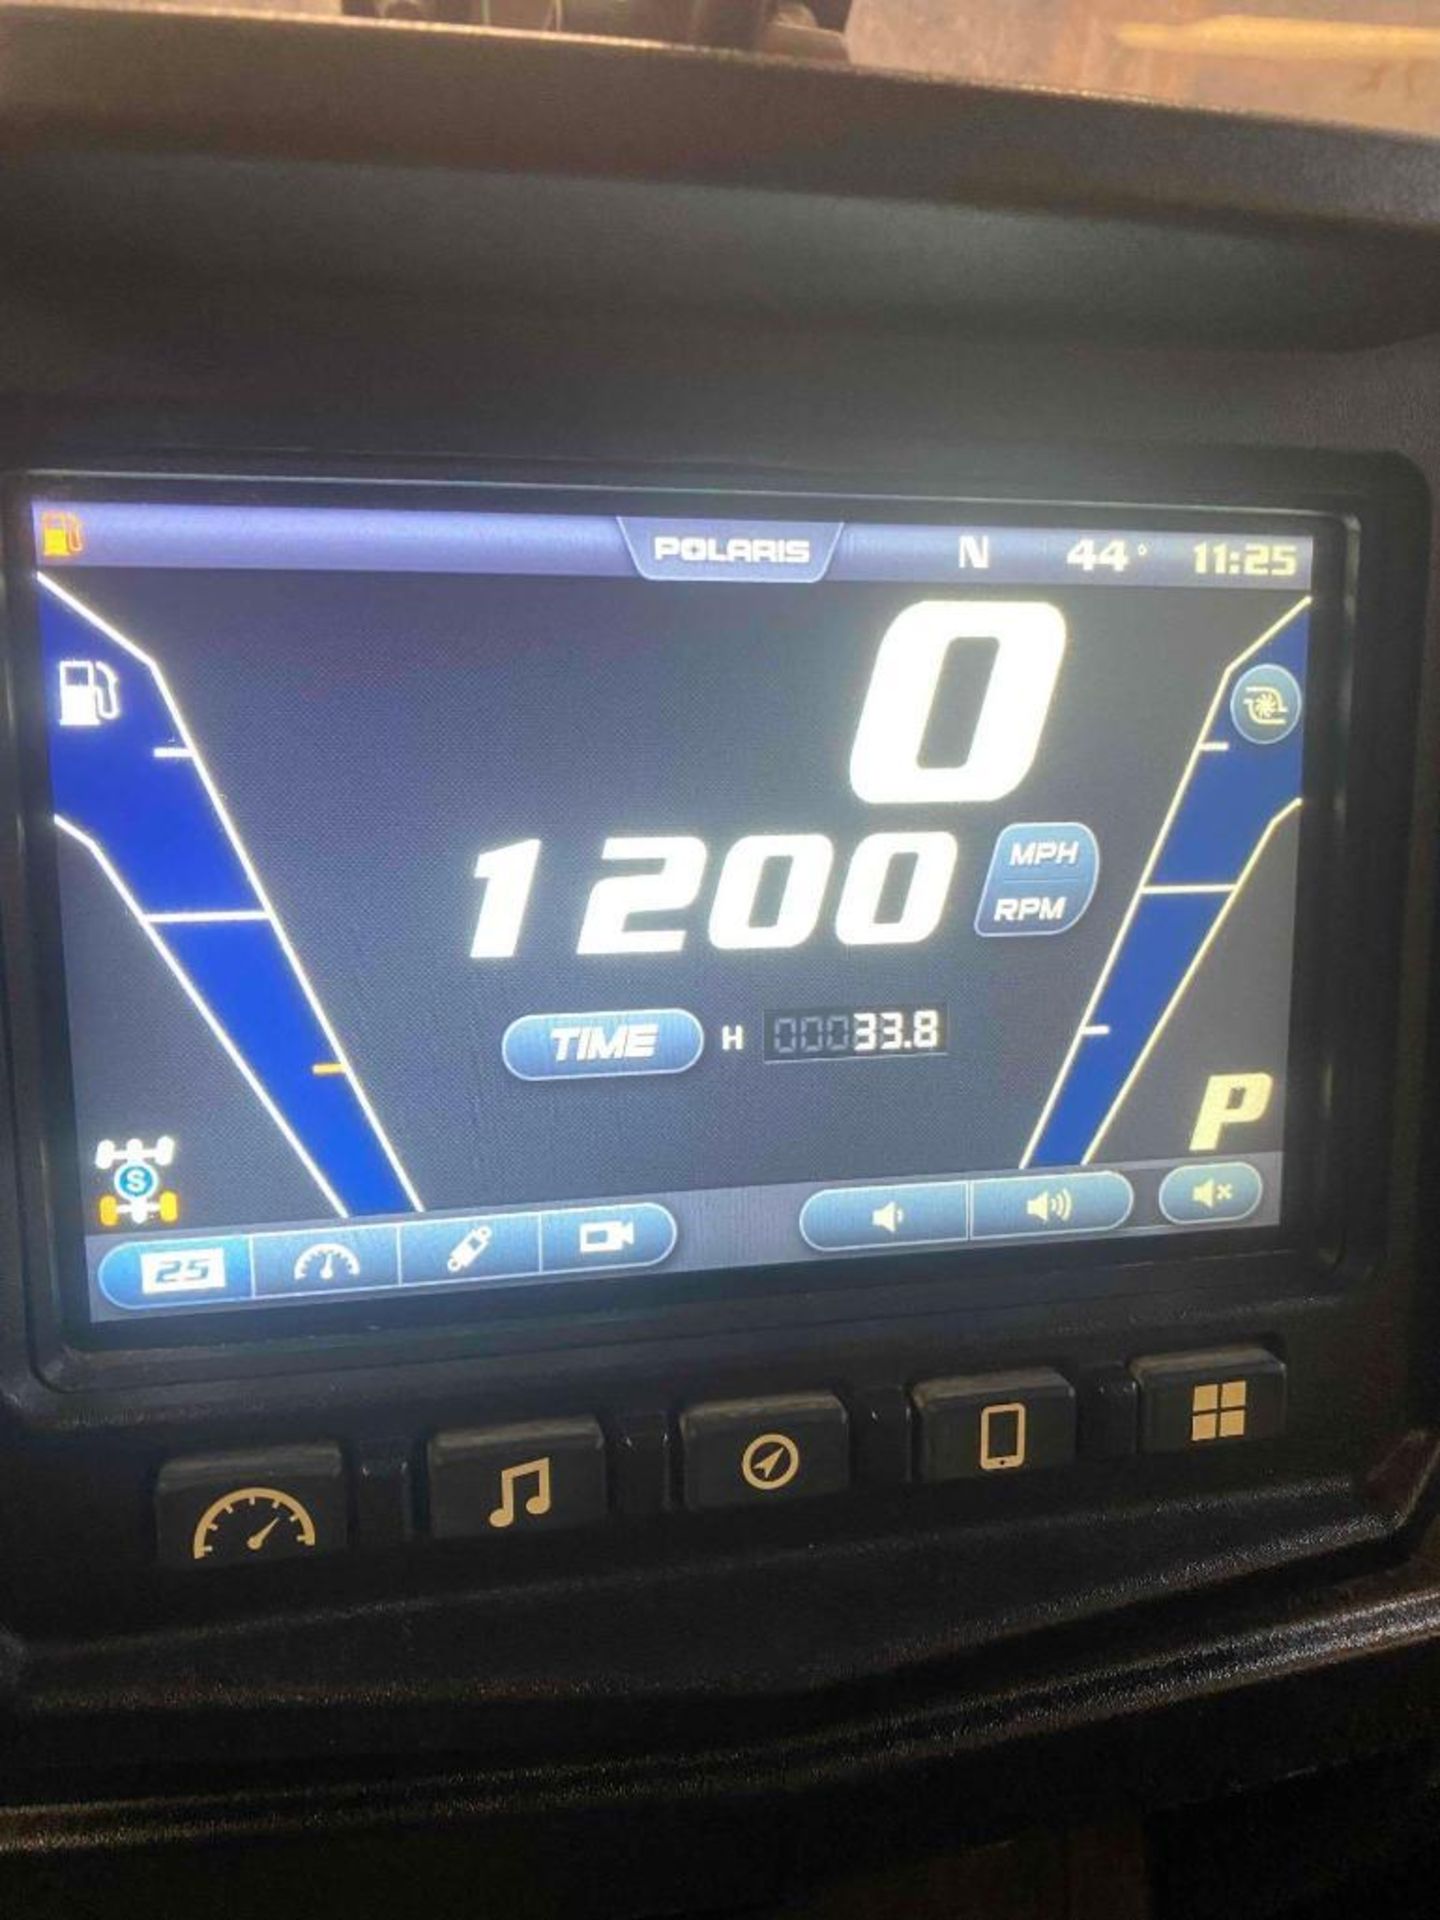 2018 Polaris RZR 1000 XP Turbo 4x4 UTV - Image 9 of 21